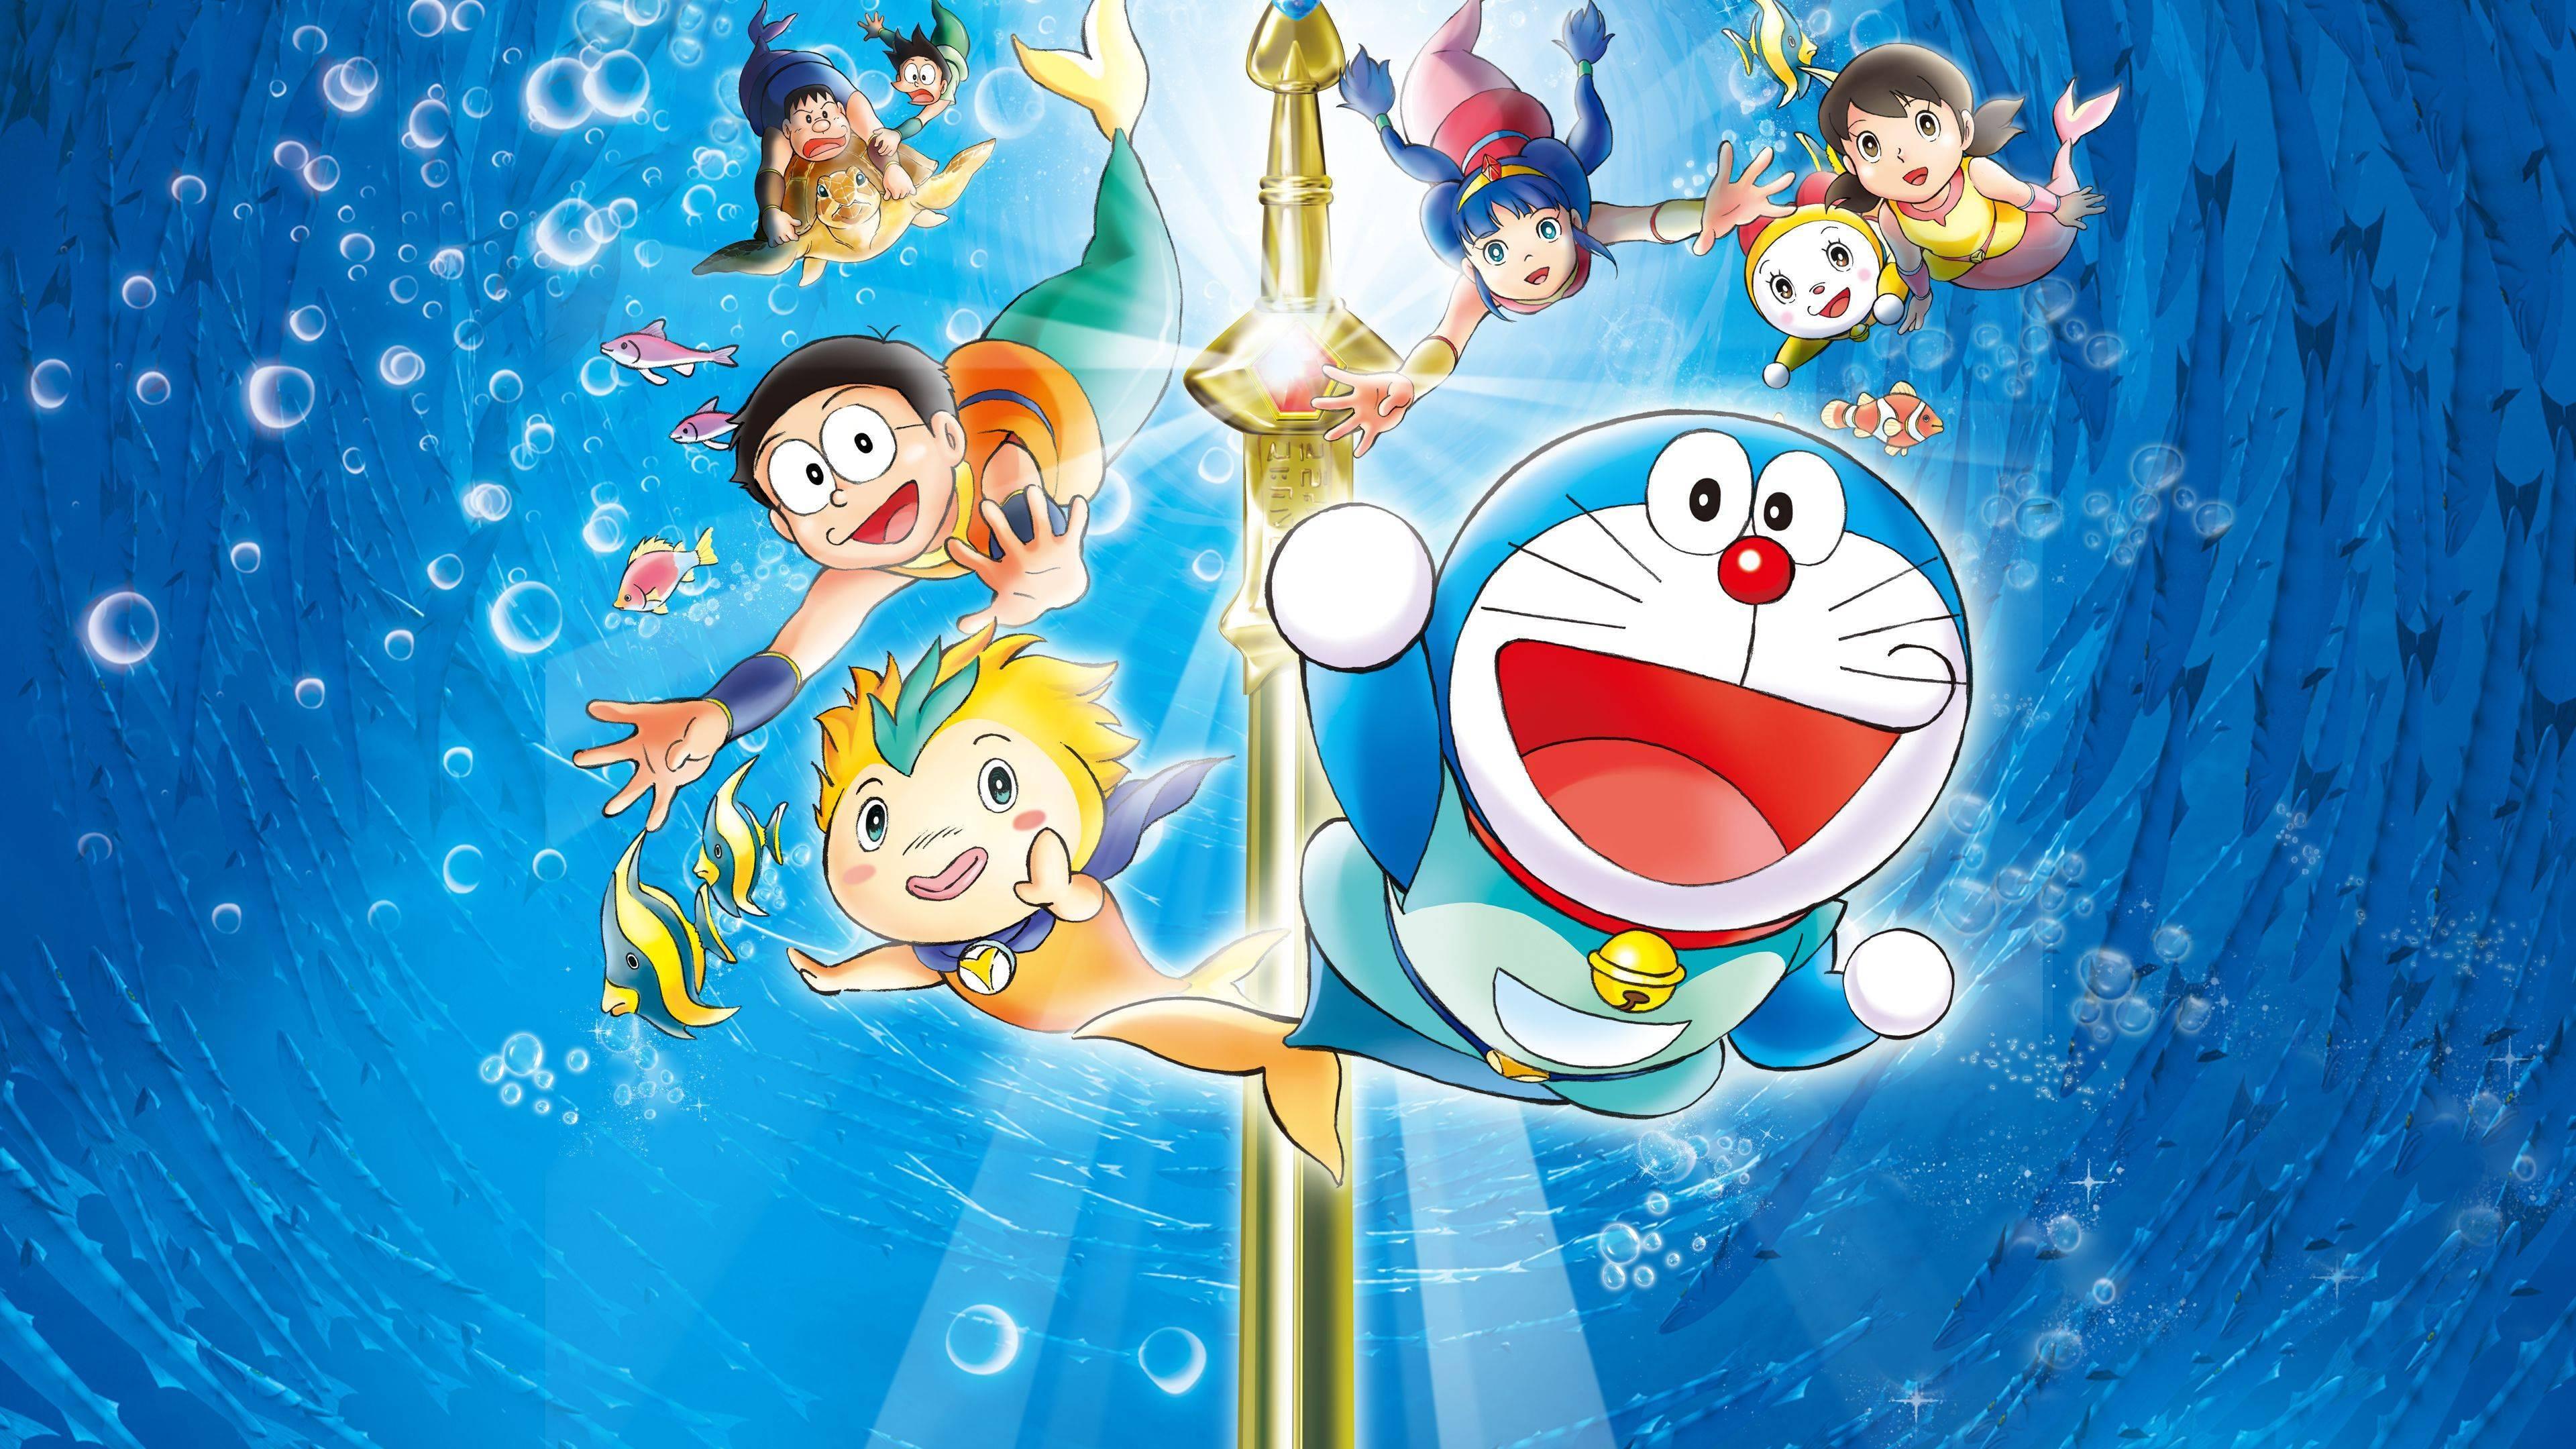 Doraemon: Nobita's Great Battle of the Mermaid King backdrop